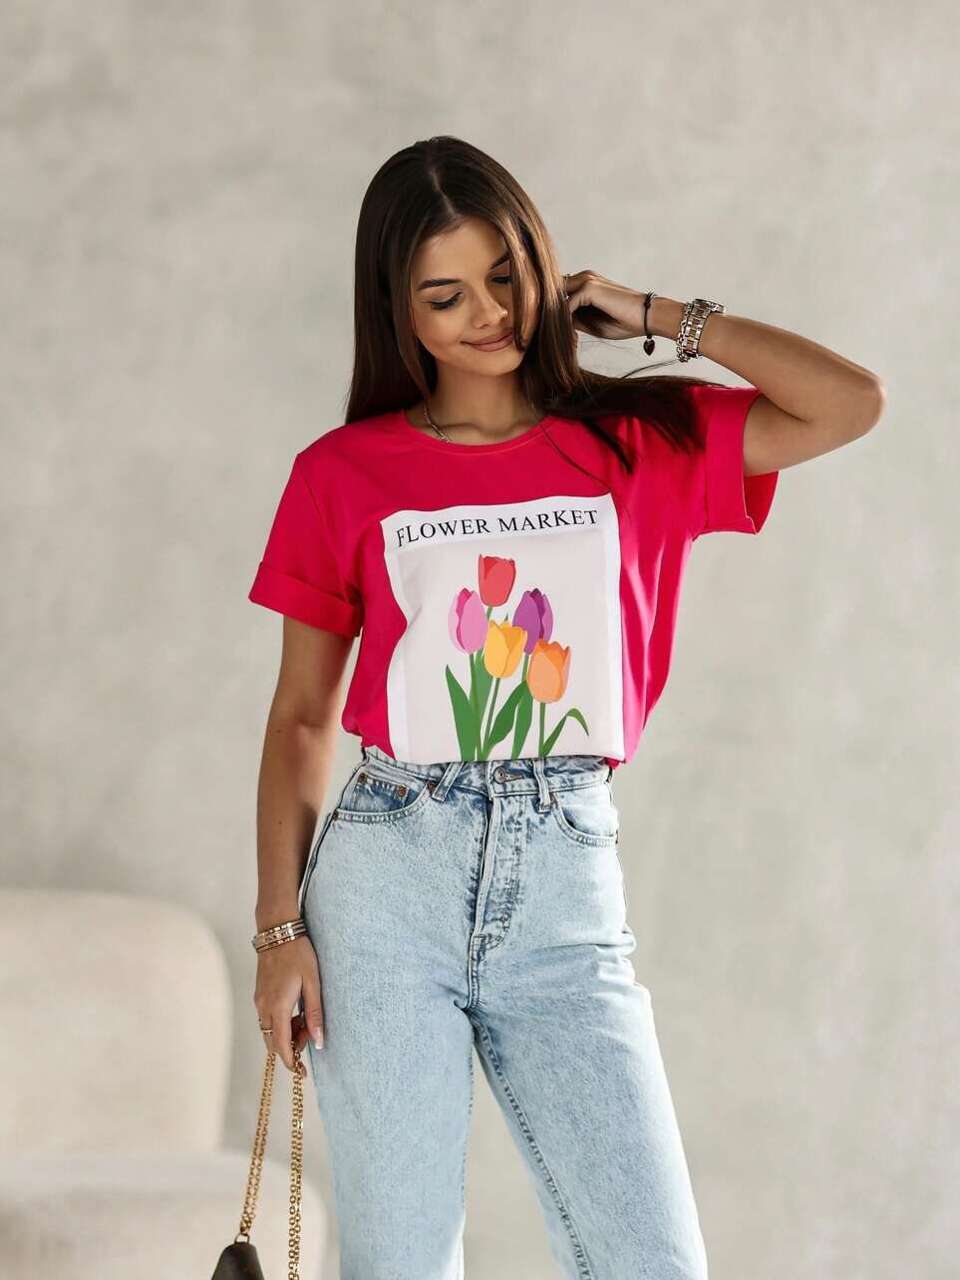 T-shirt TULIPANY Flower Market